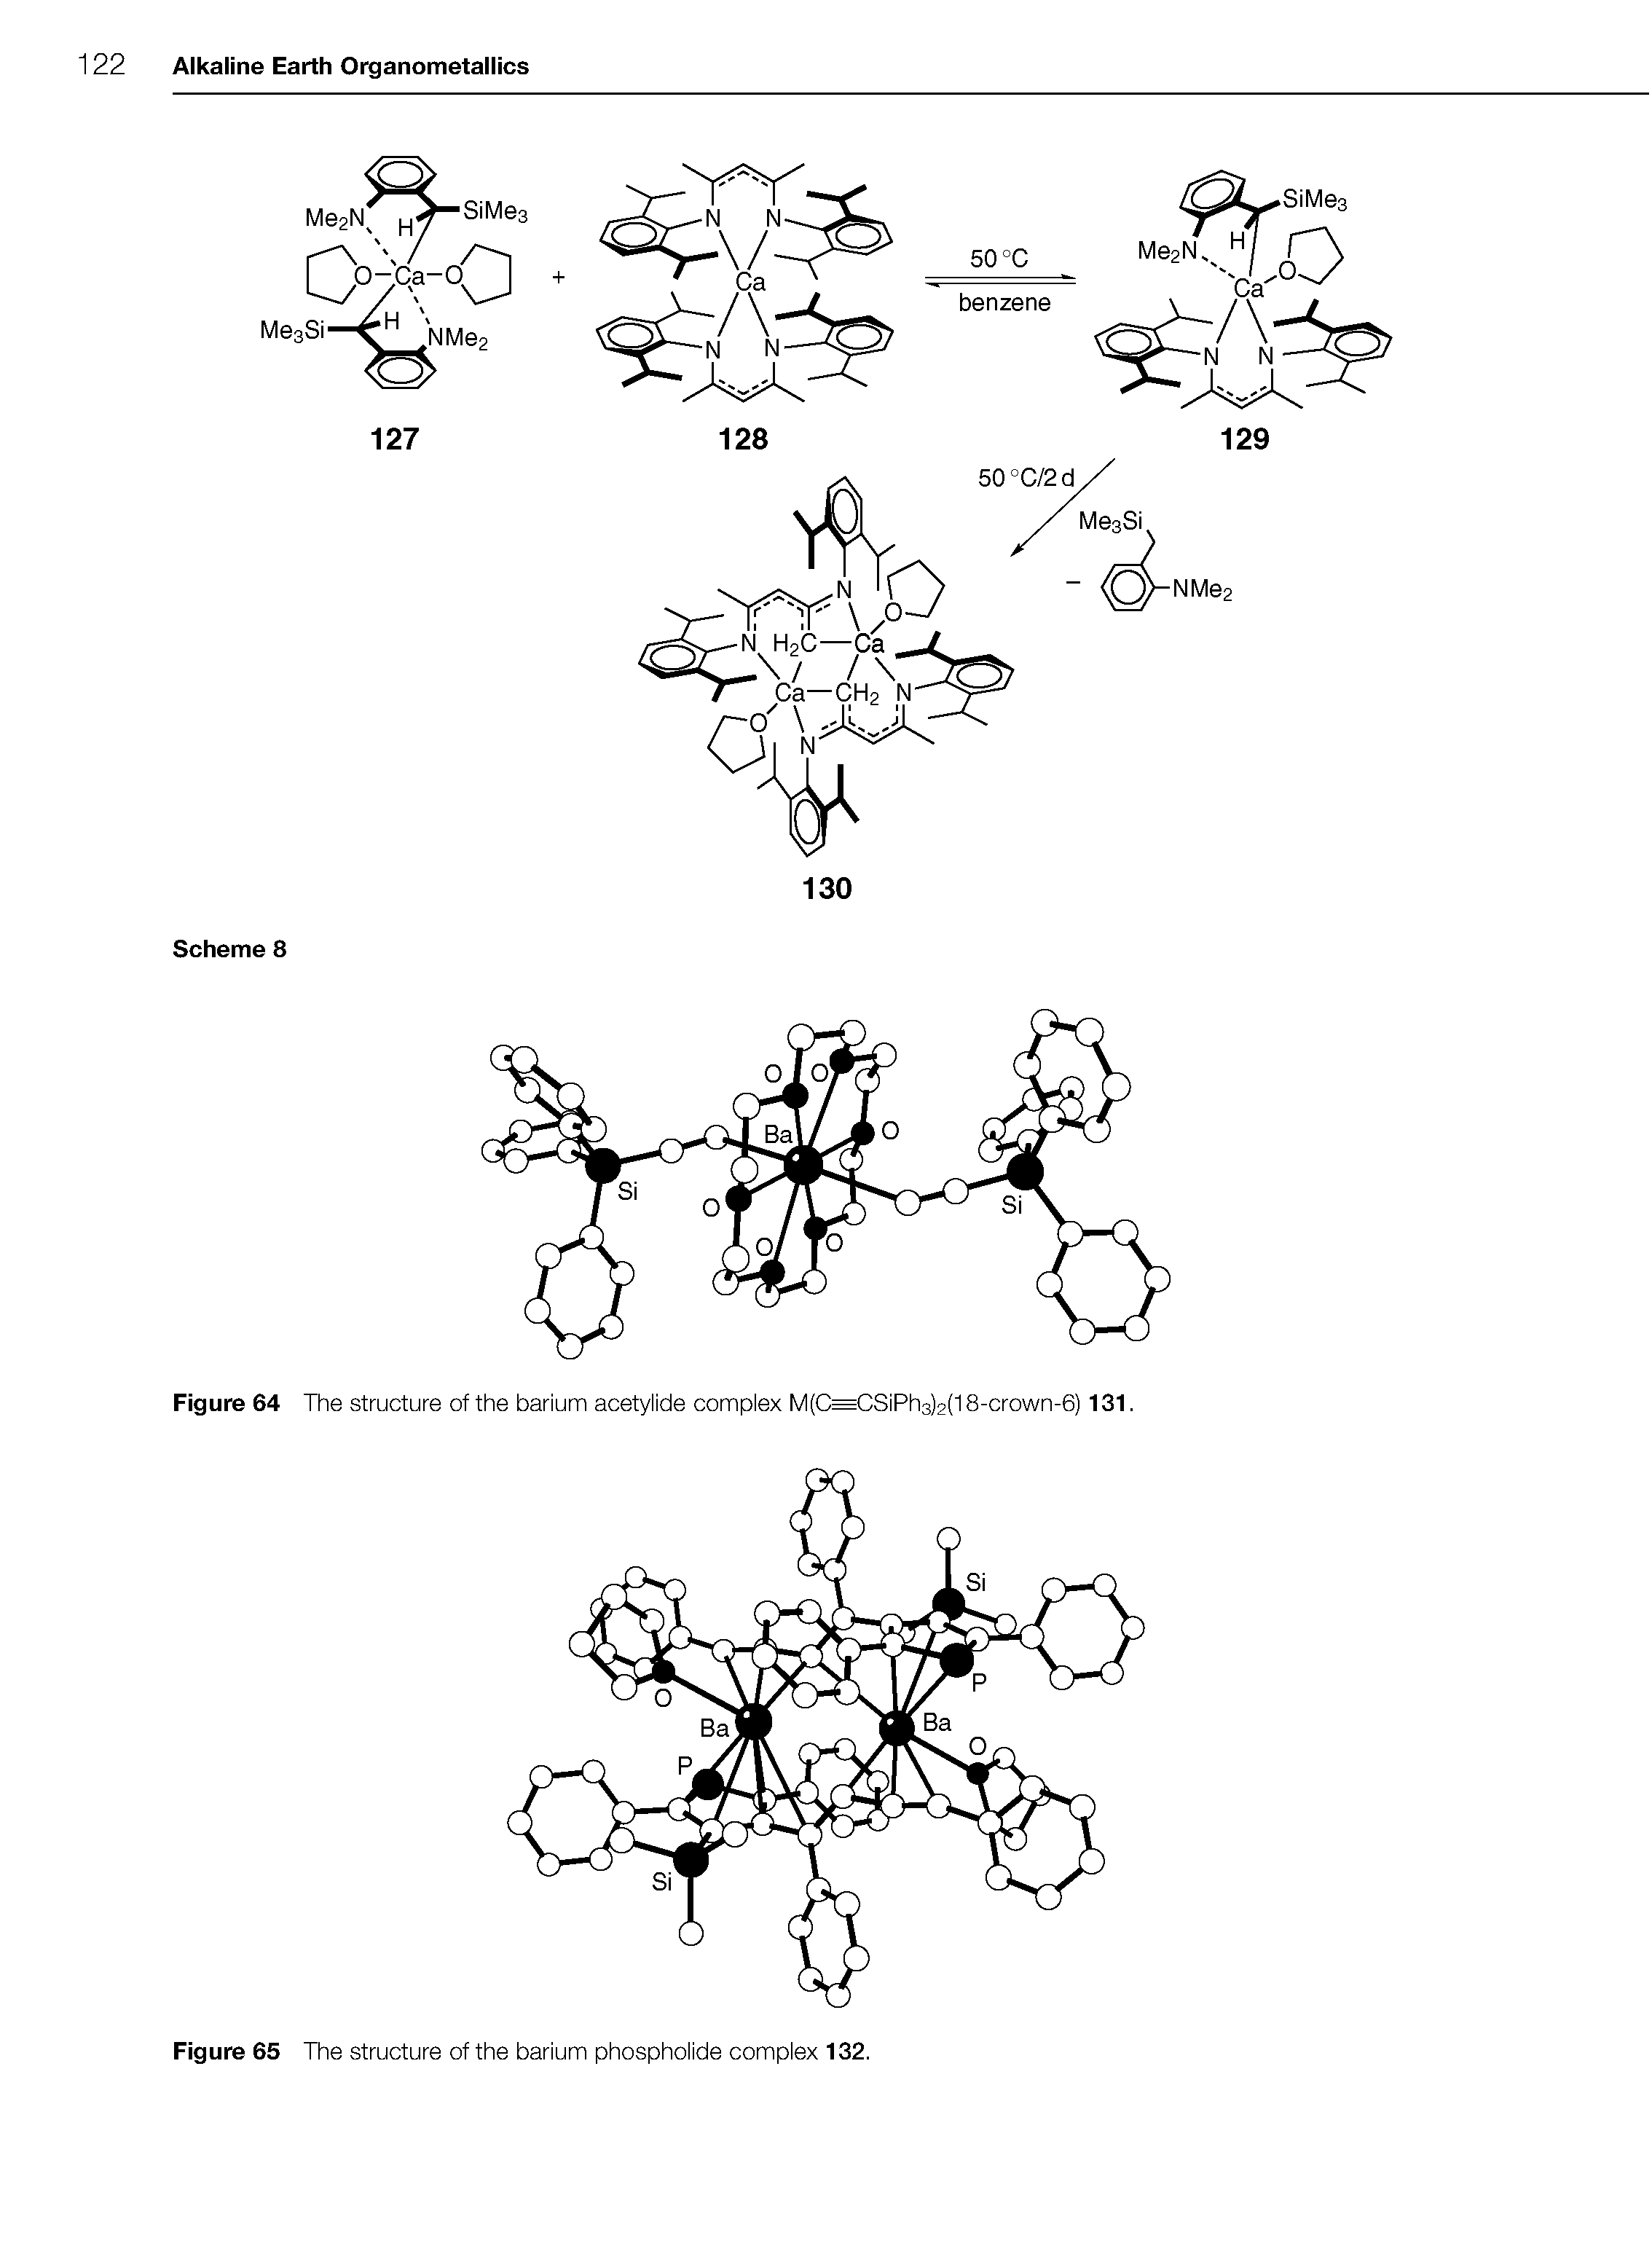 Figure 64 The structure of the barium acetylide complex M(C=CSiPh3)2(18-crown-6) 131.